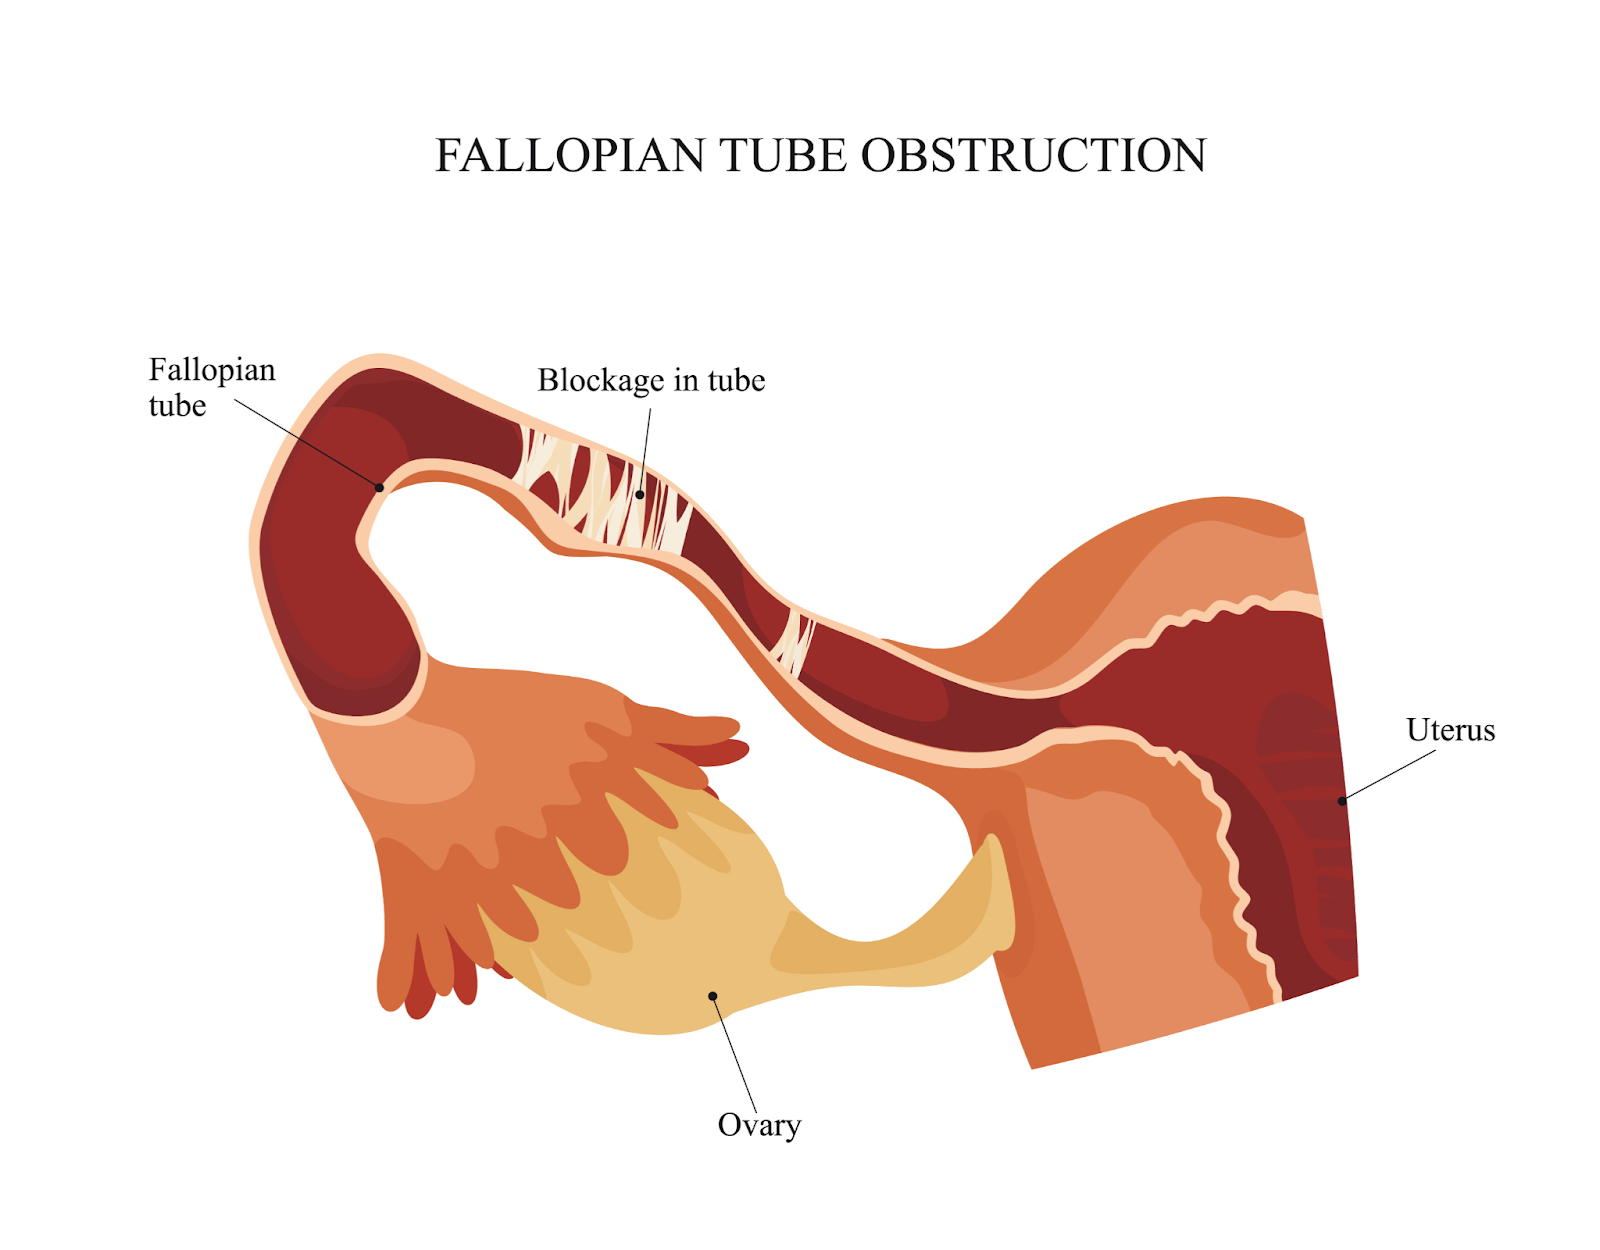 Fallopian tube obstruction